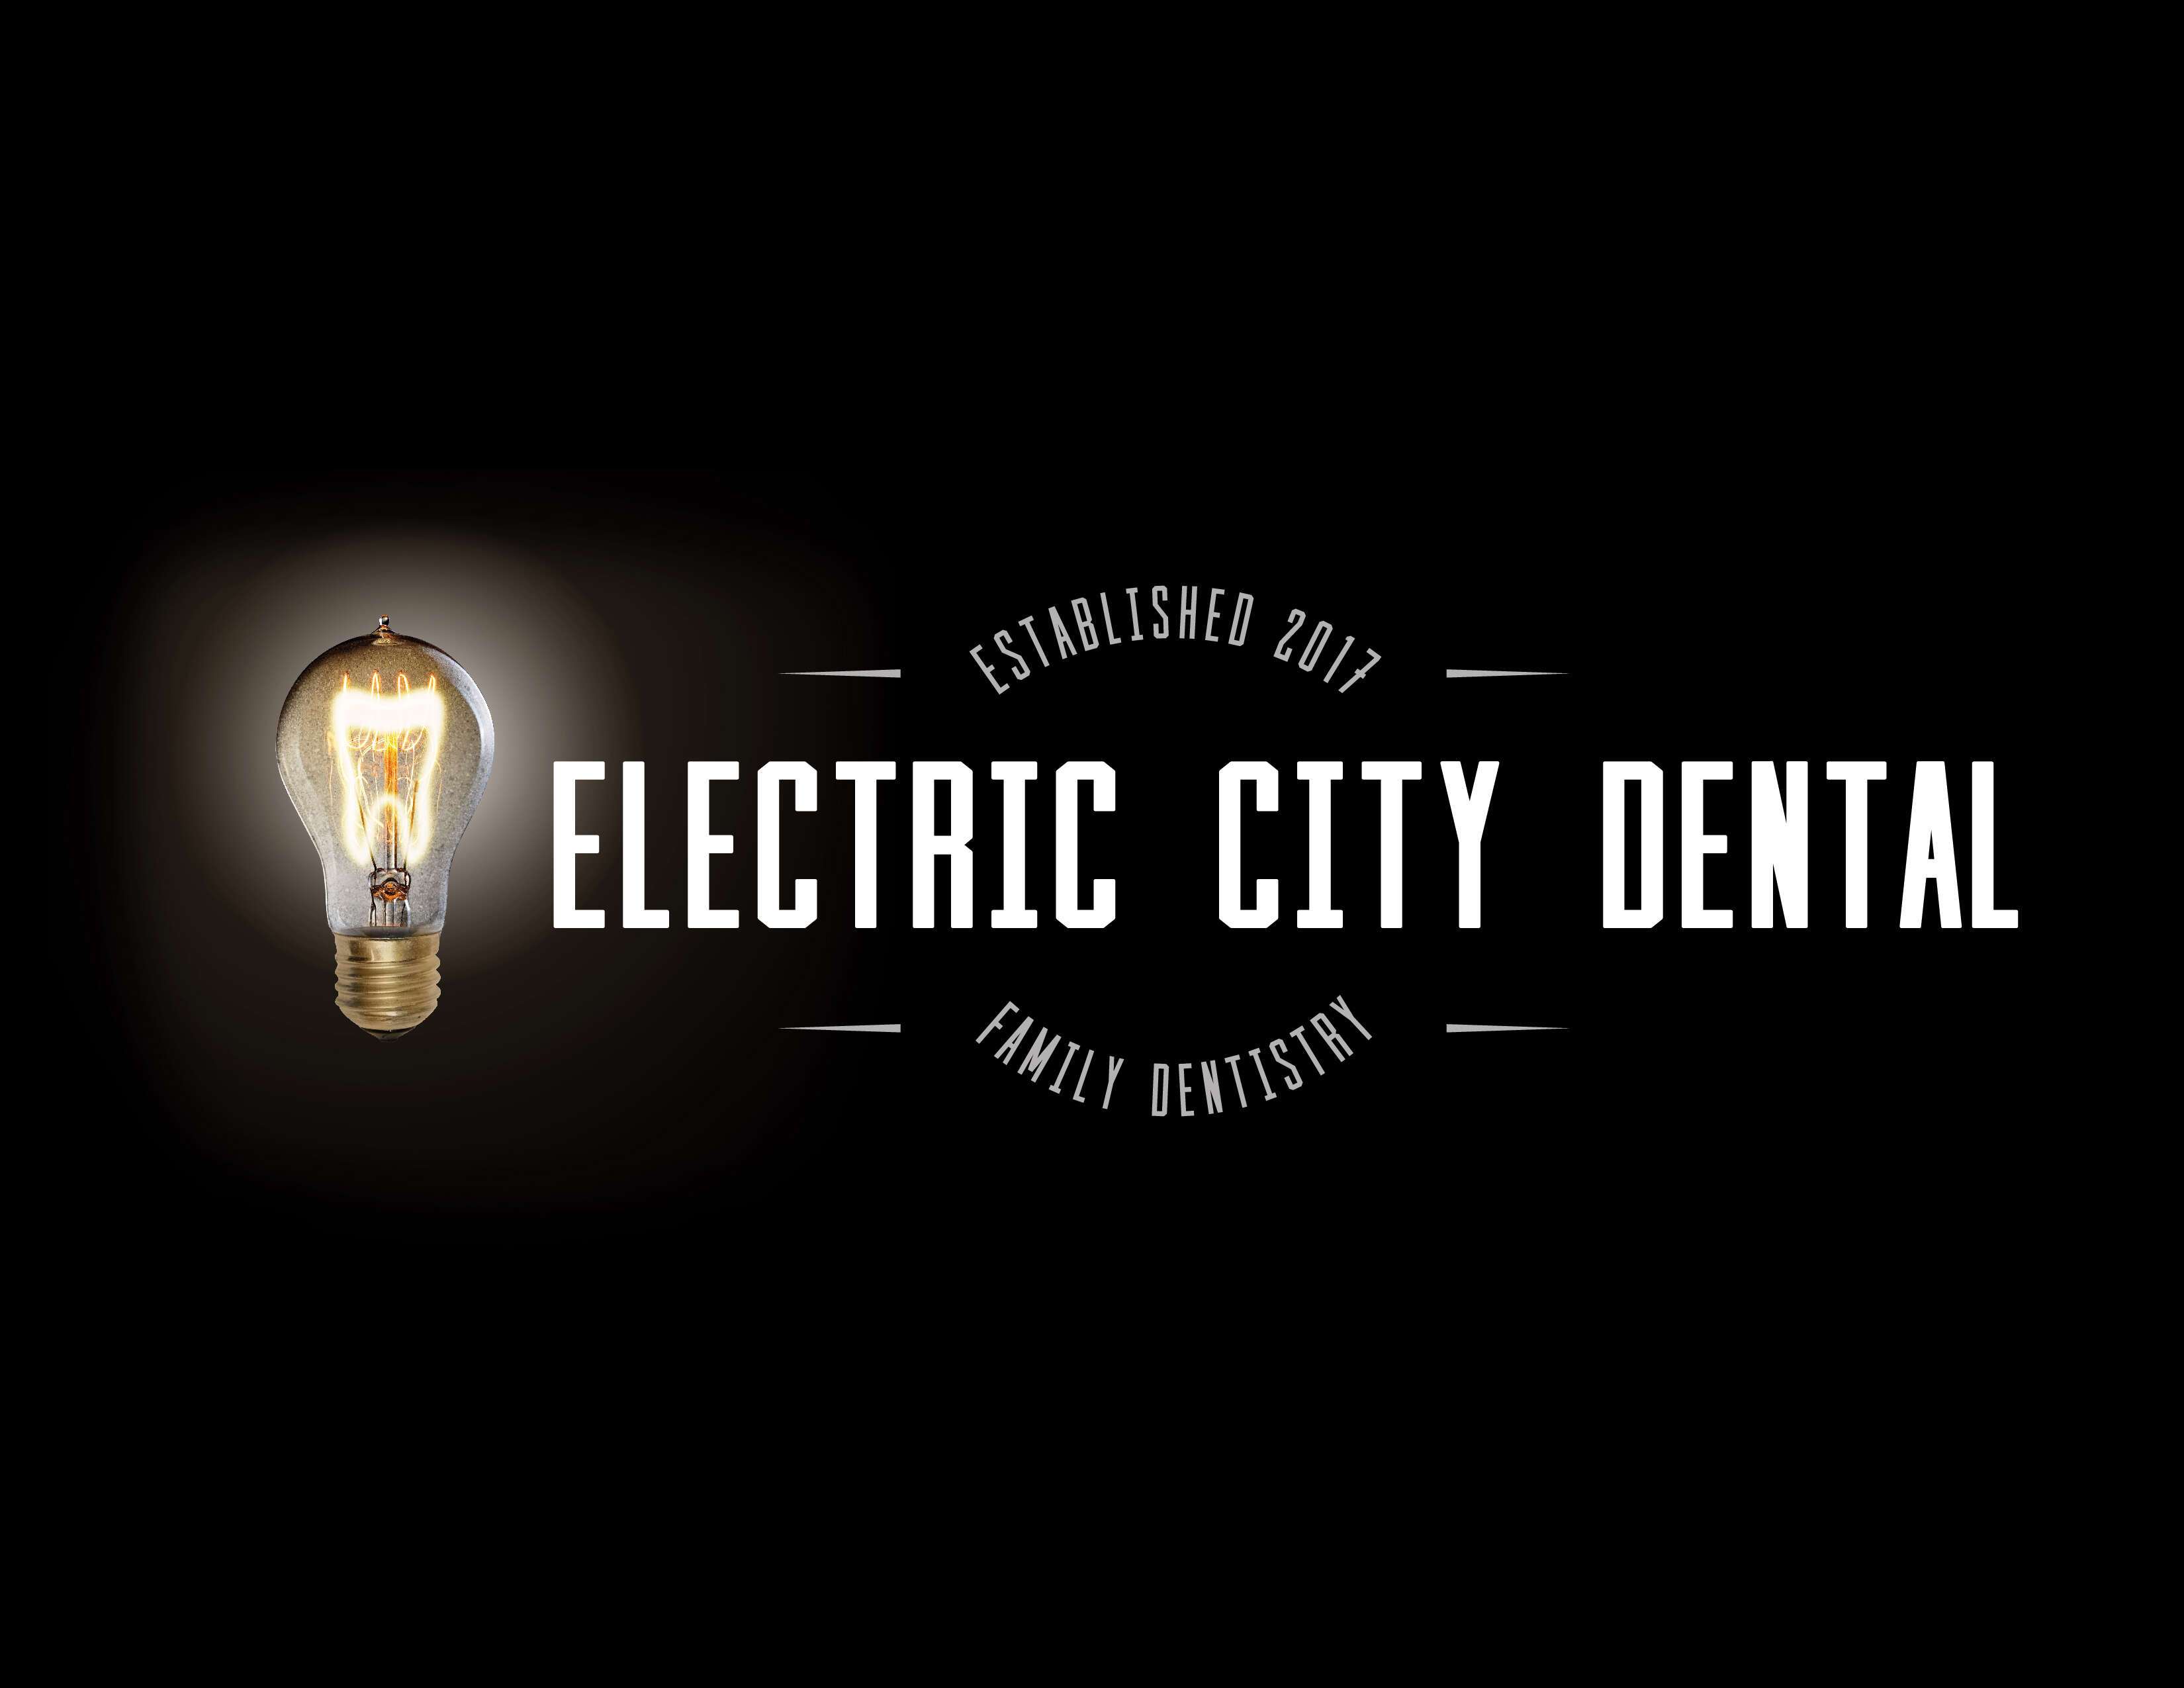 Electric City Dental